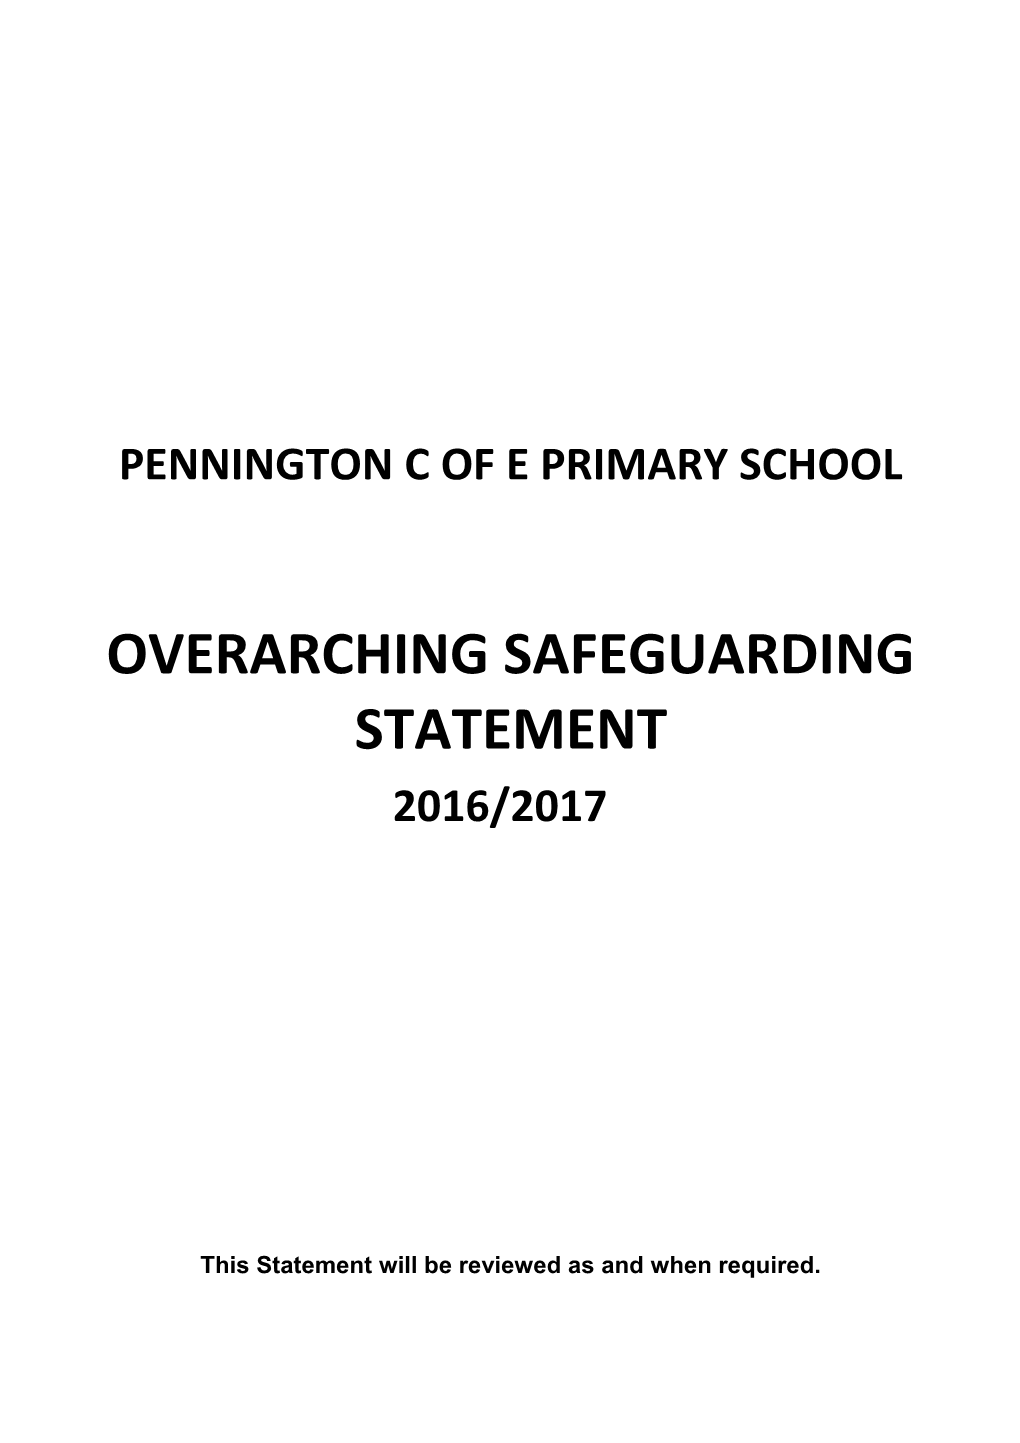 Pennington C of E Primary School